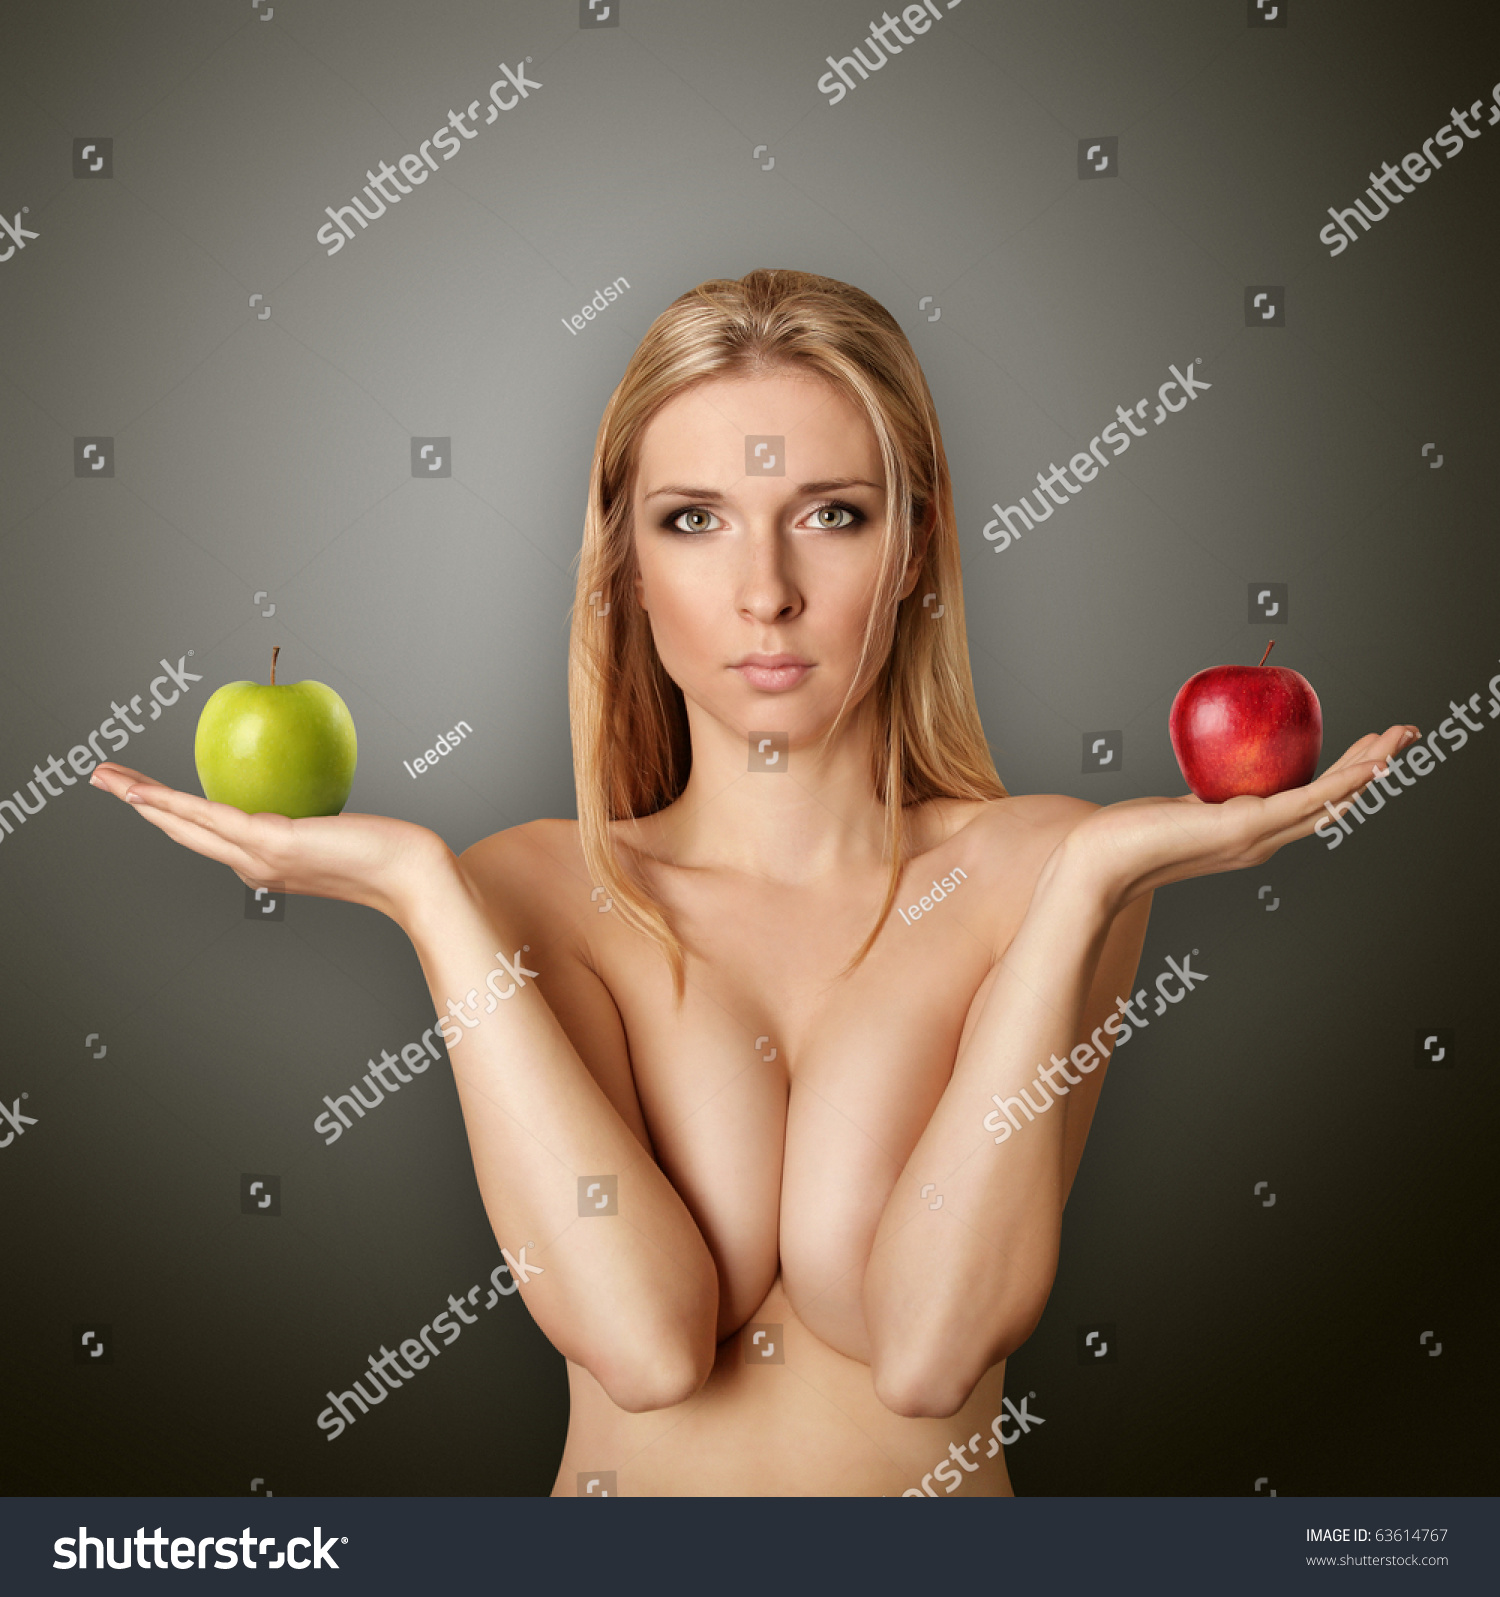 Apple - nude photos